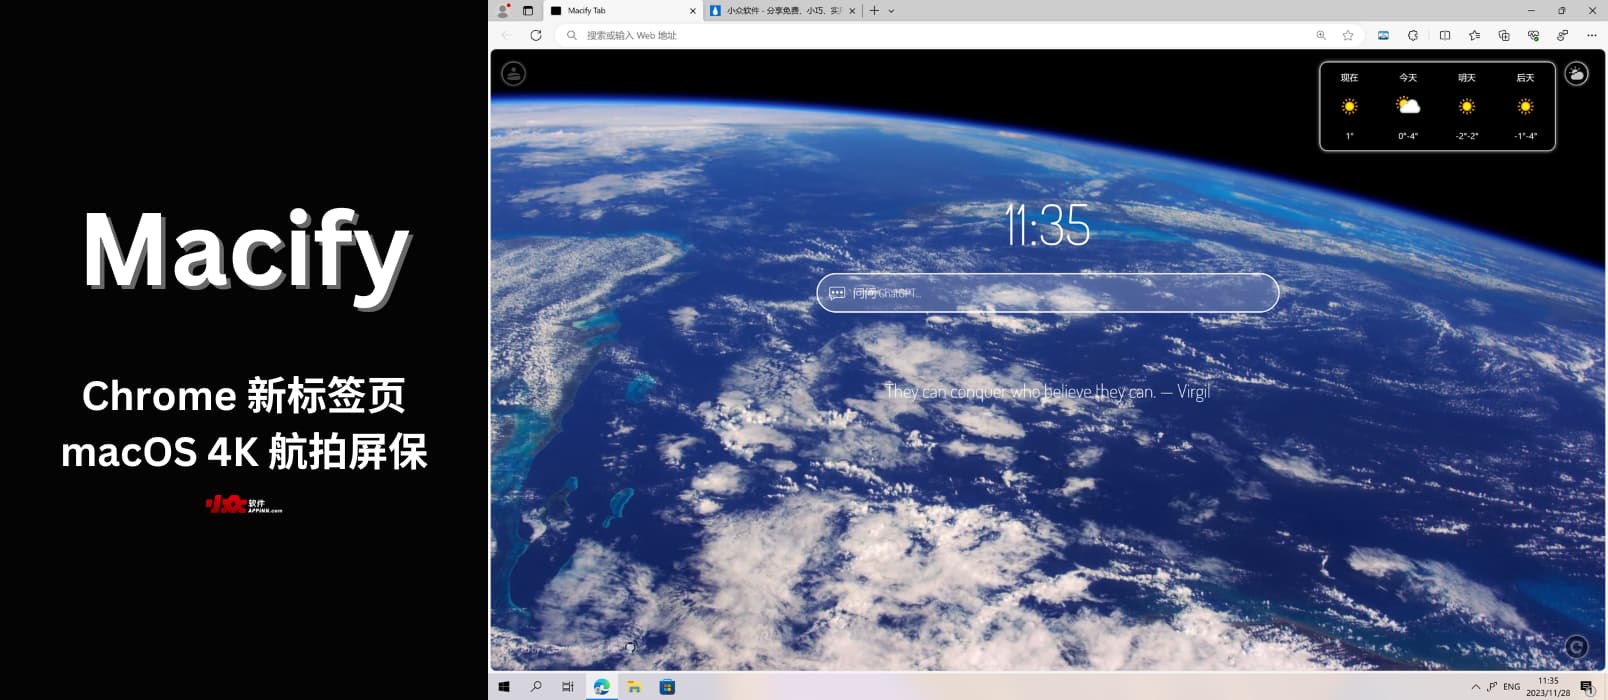 Macify - 在 Chrome 新标签页显示 macOS 原生自带 4K 航拍屏保视频